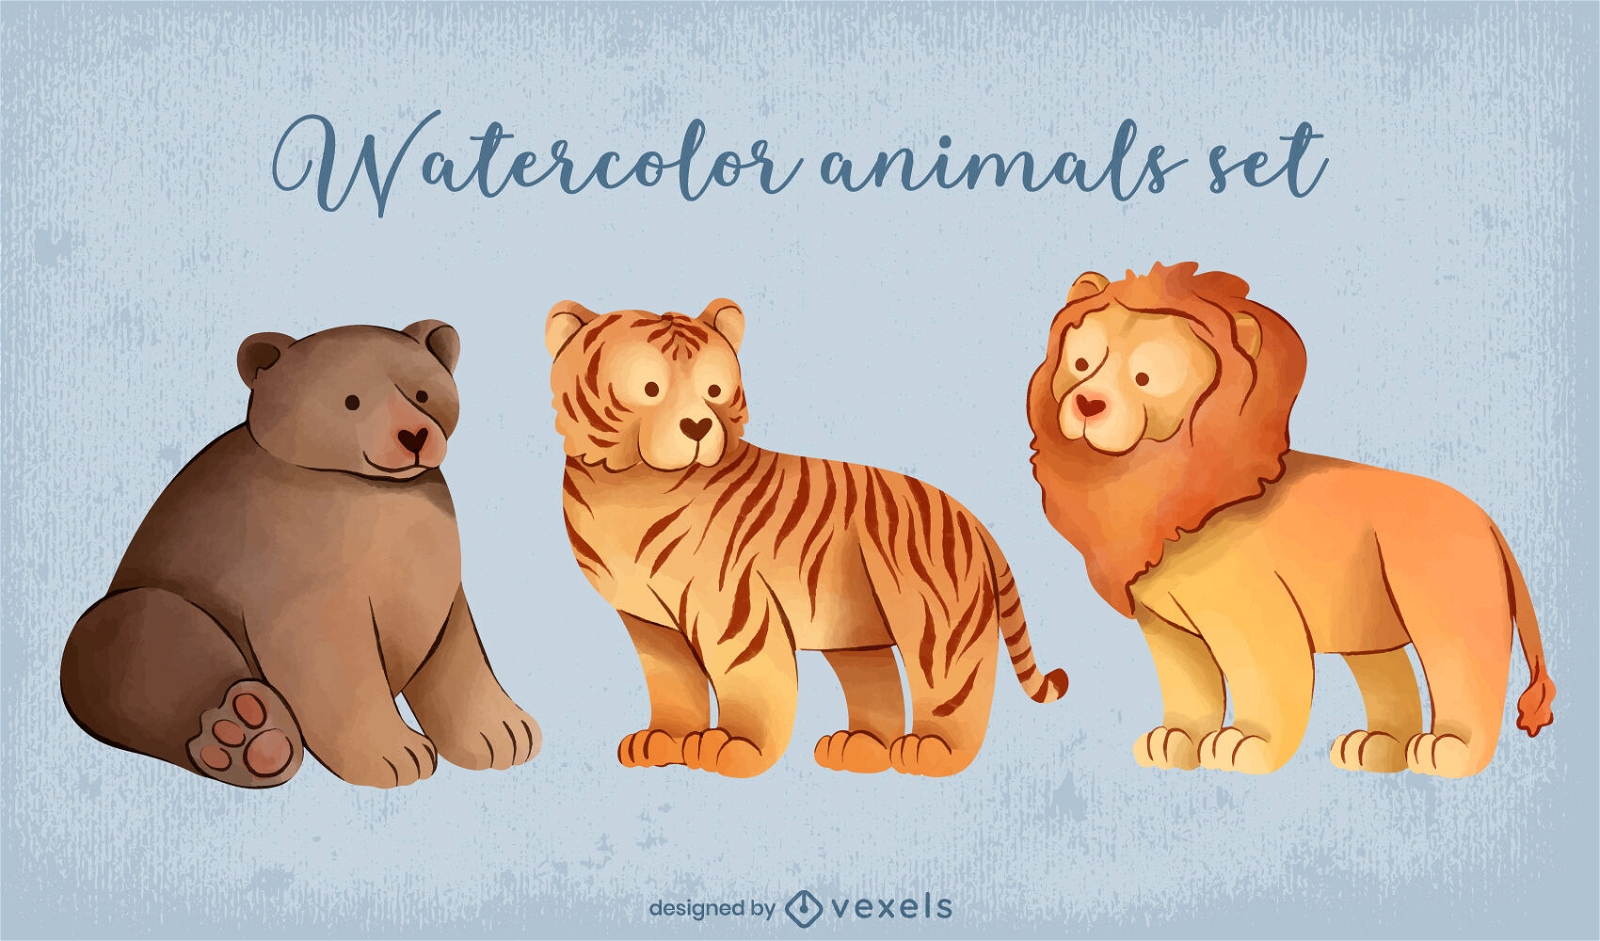 Adorable watercolor wild animals set